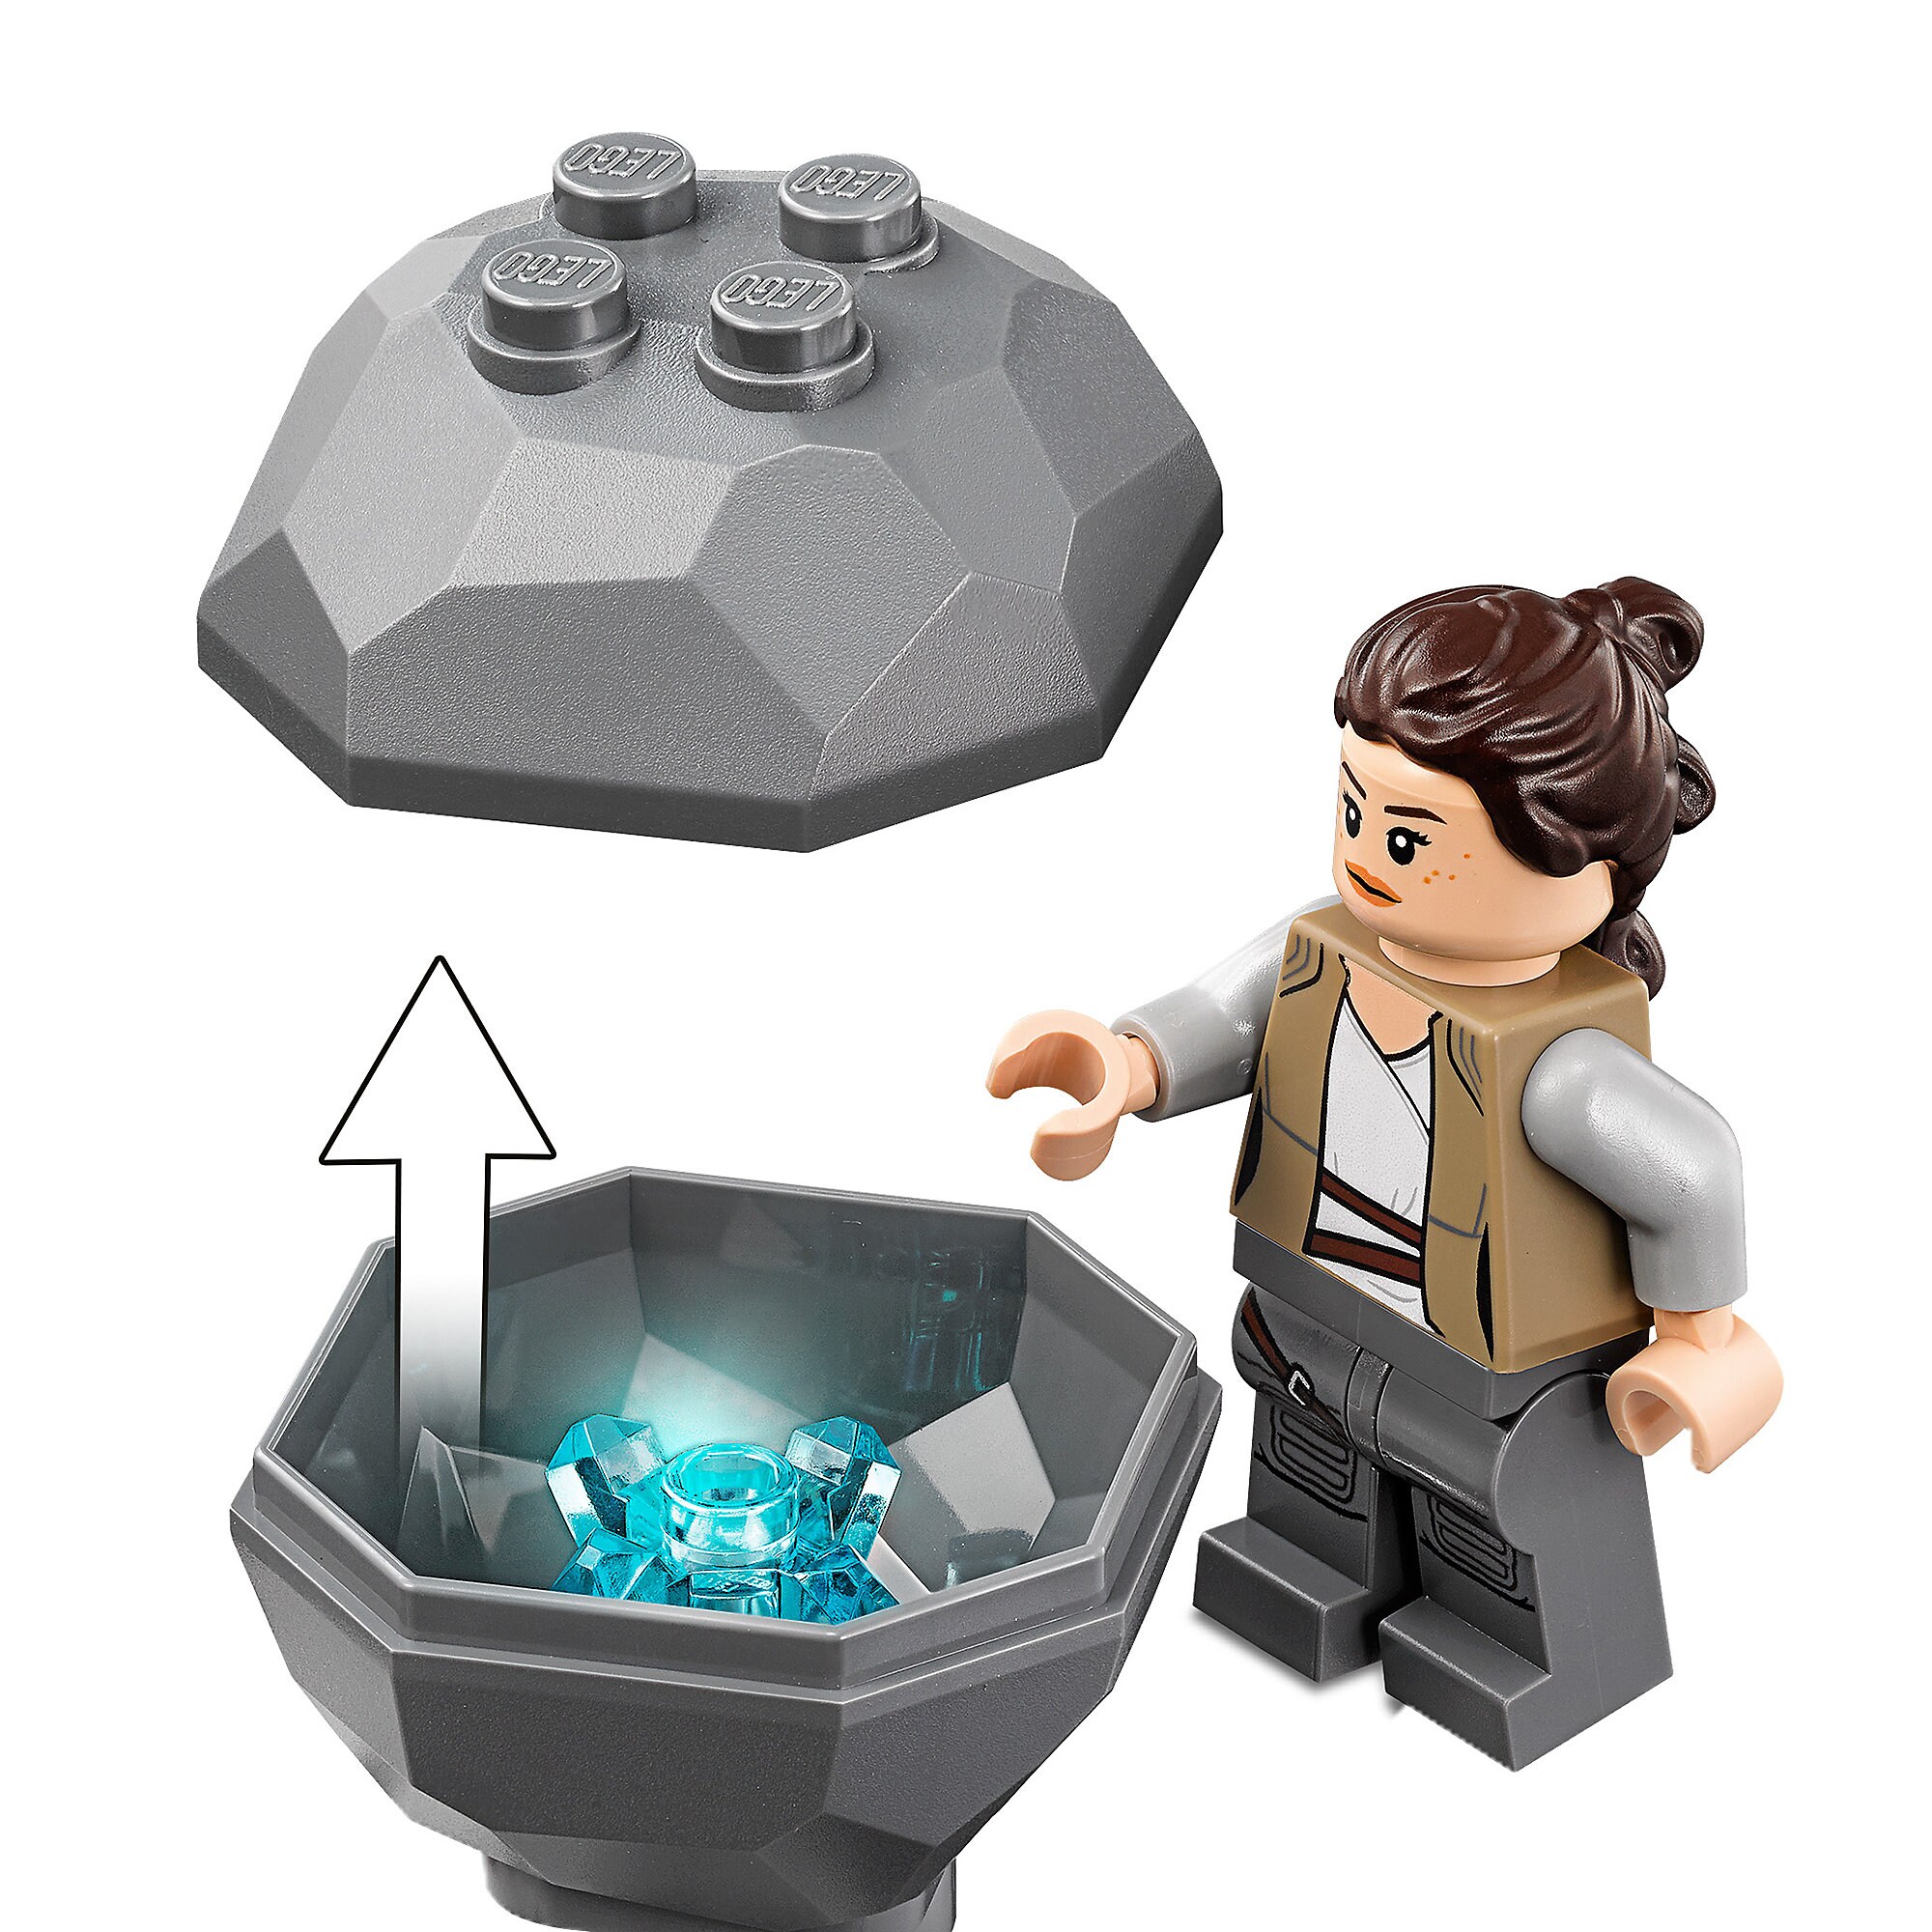 Ahch-To Island Training Playset by LEGO - Star Wars: The Last Jedi